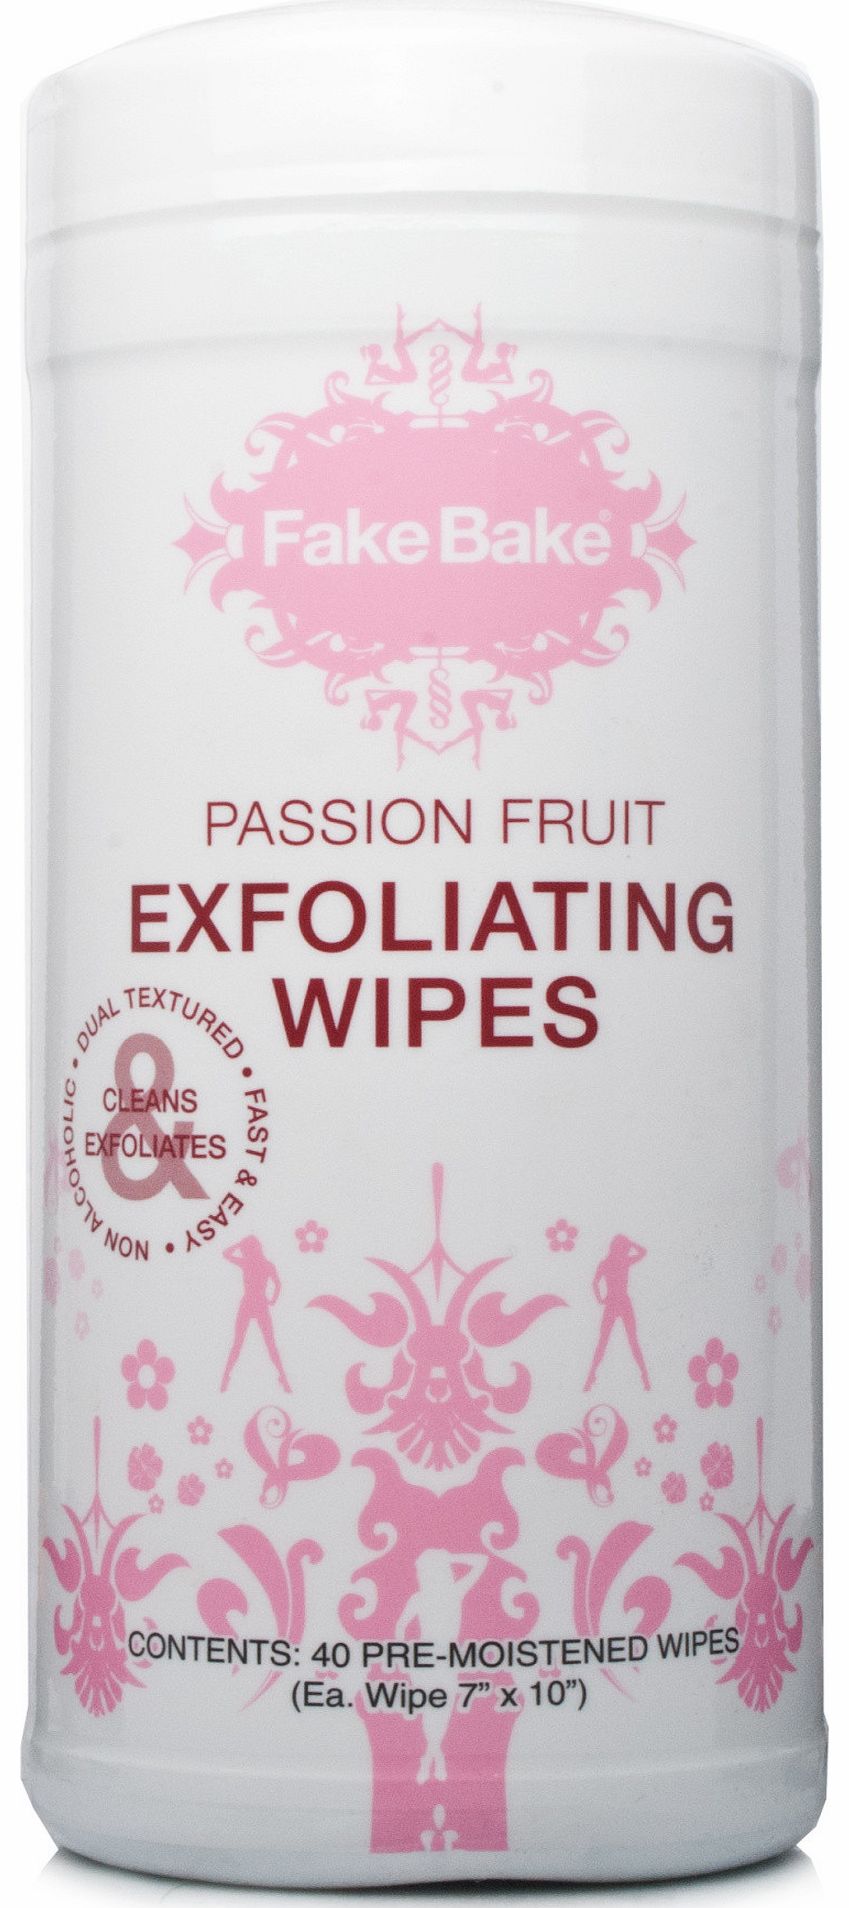 Fake Bake Passion Fruit Exfoliating Wipes